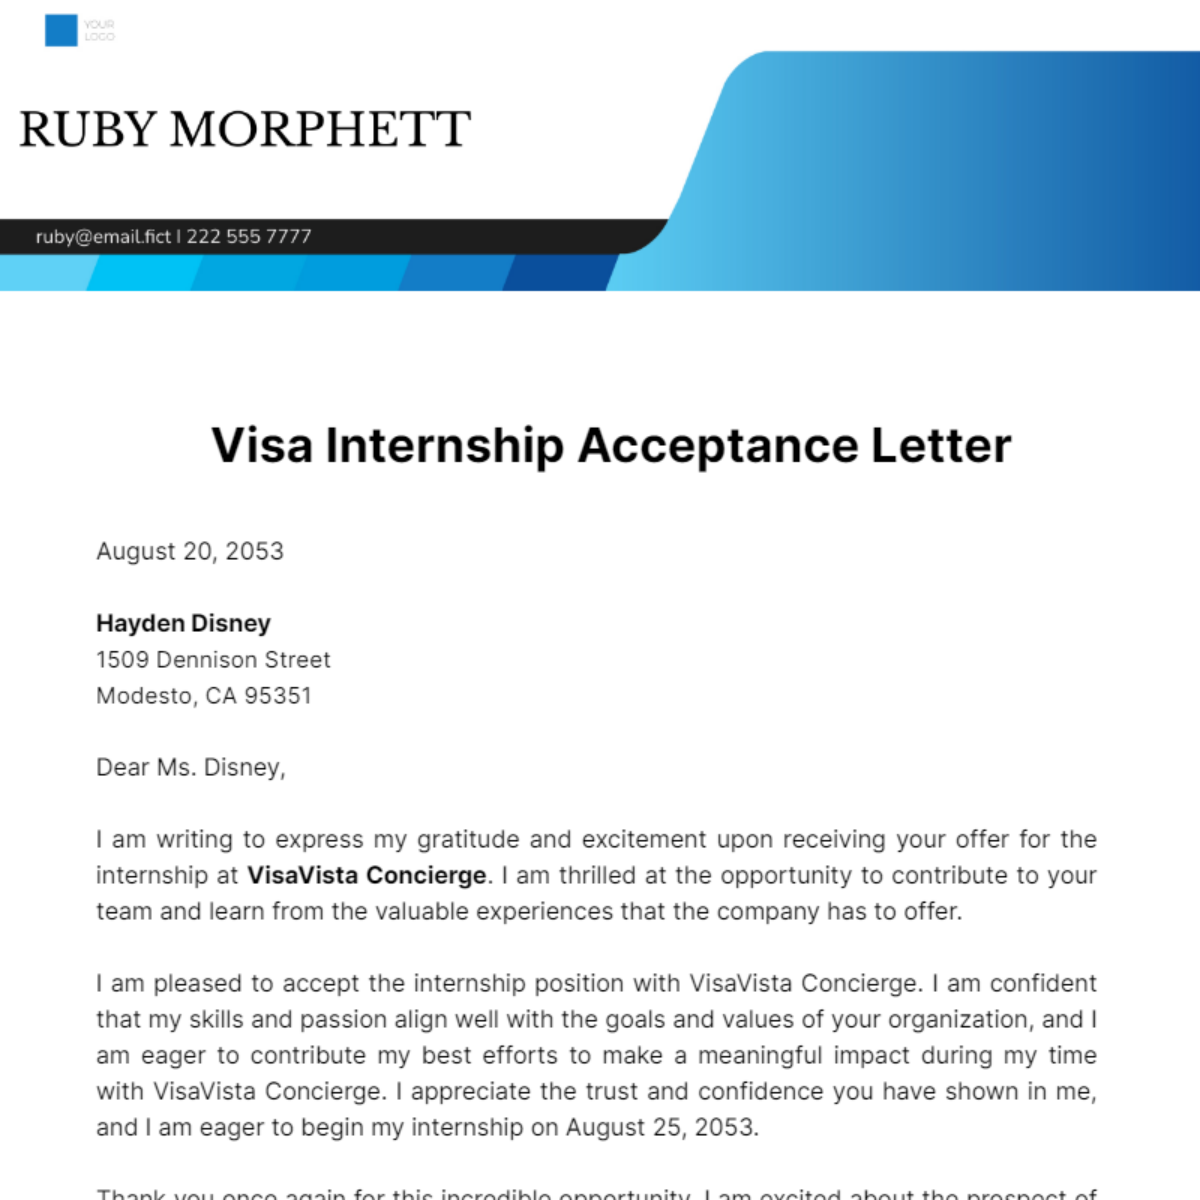 Visa Internship Acceptance Letter Template